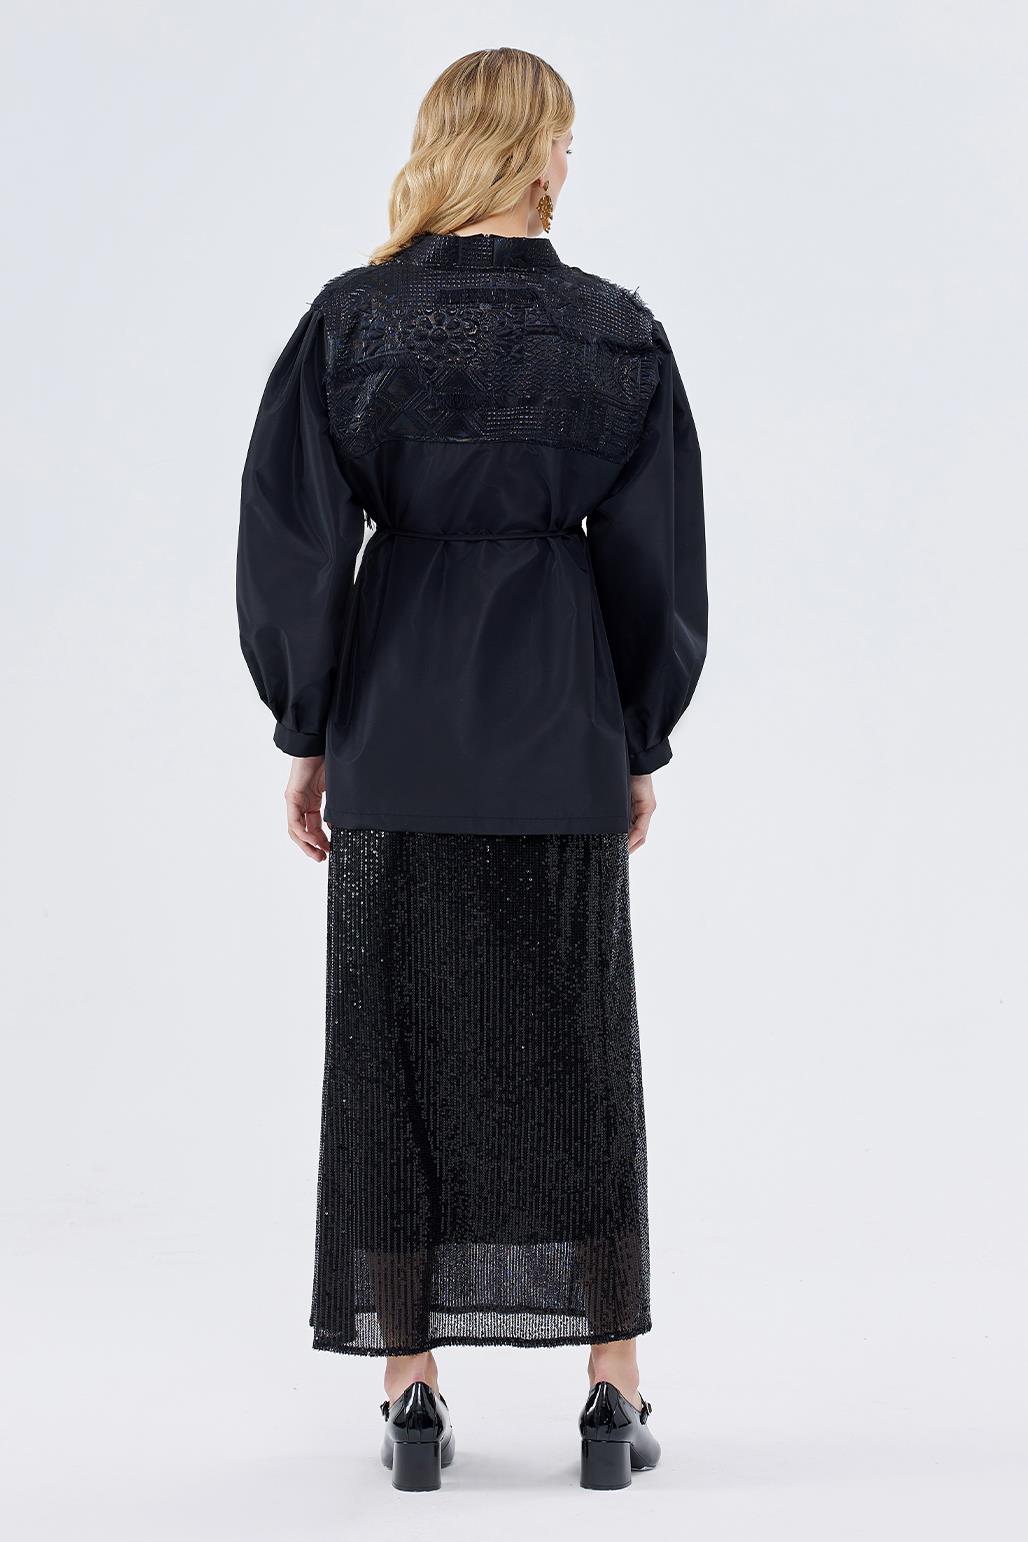 Taffeta Jacquard Garnish Kimono Black